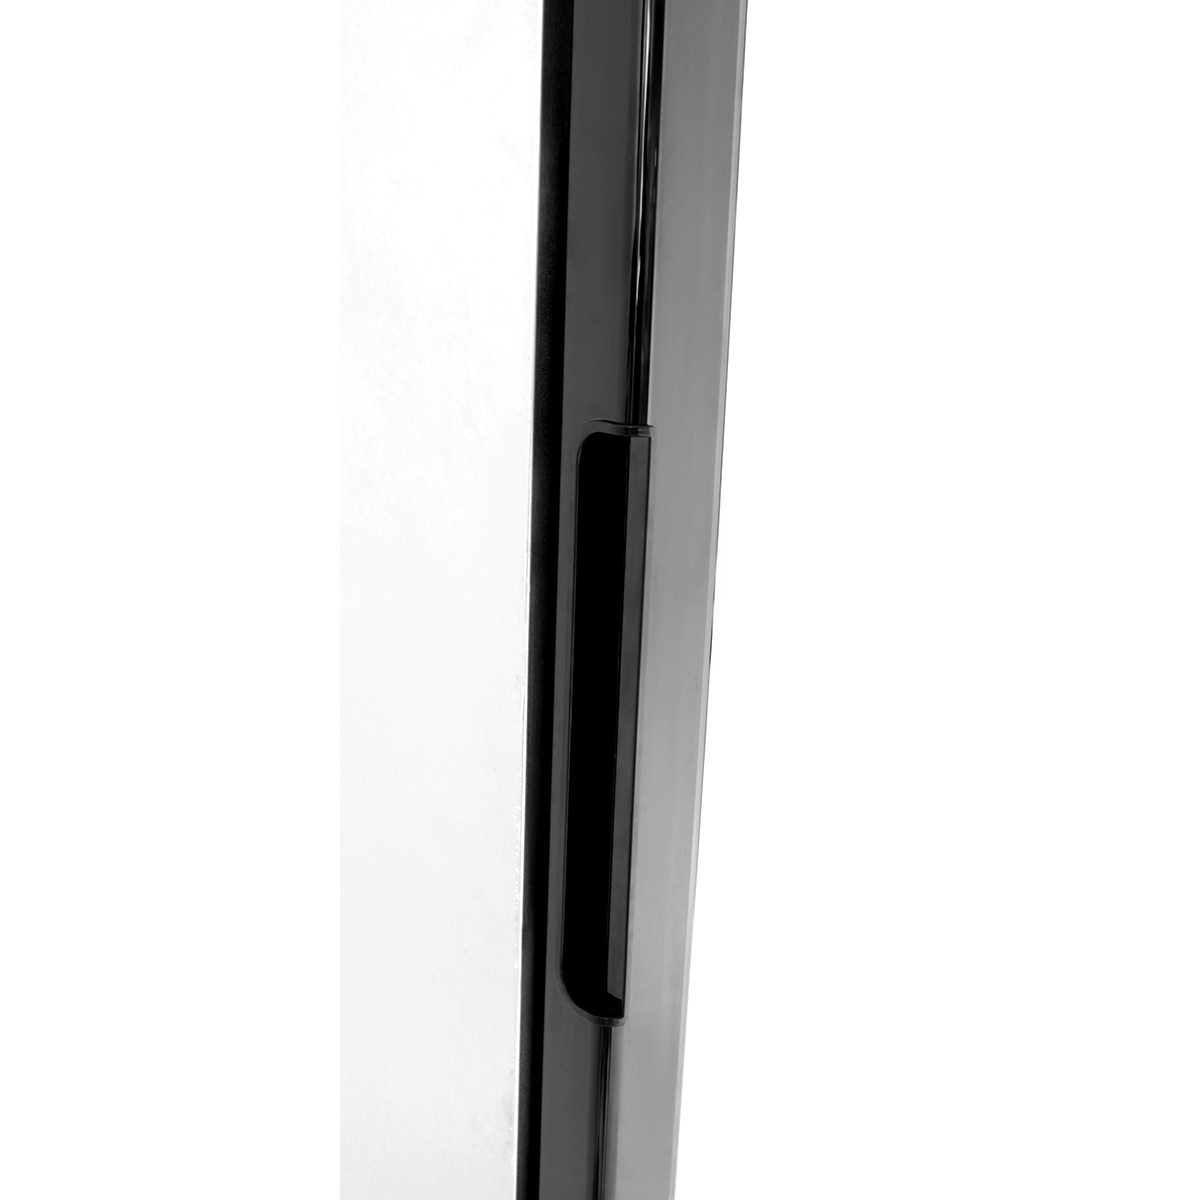 Atosa MCF8722GR Bottom Mount Refrigerator Merchandiser 27"W x 31-1/2"D x 81-1/4"H with Self-Closing Glass Door with Lock image 4